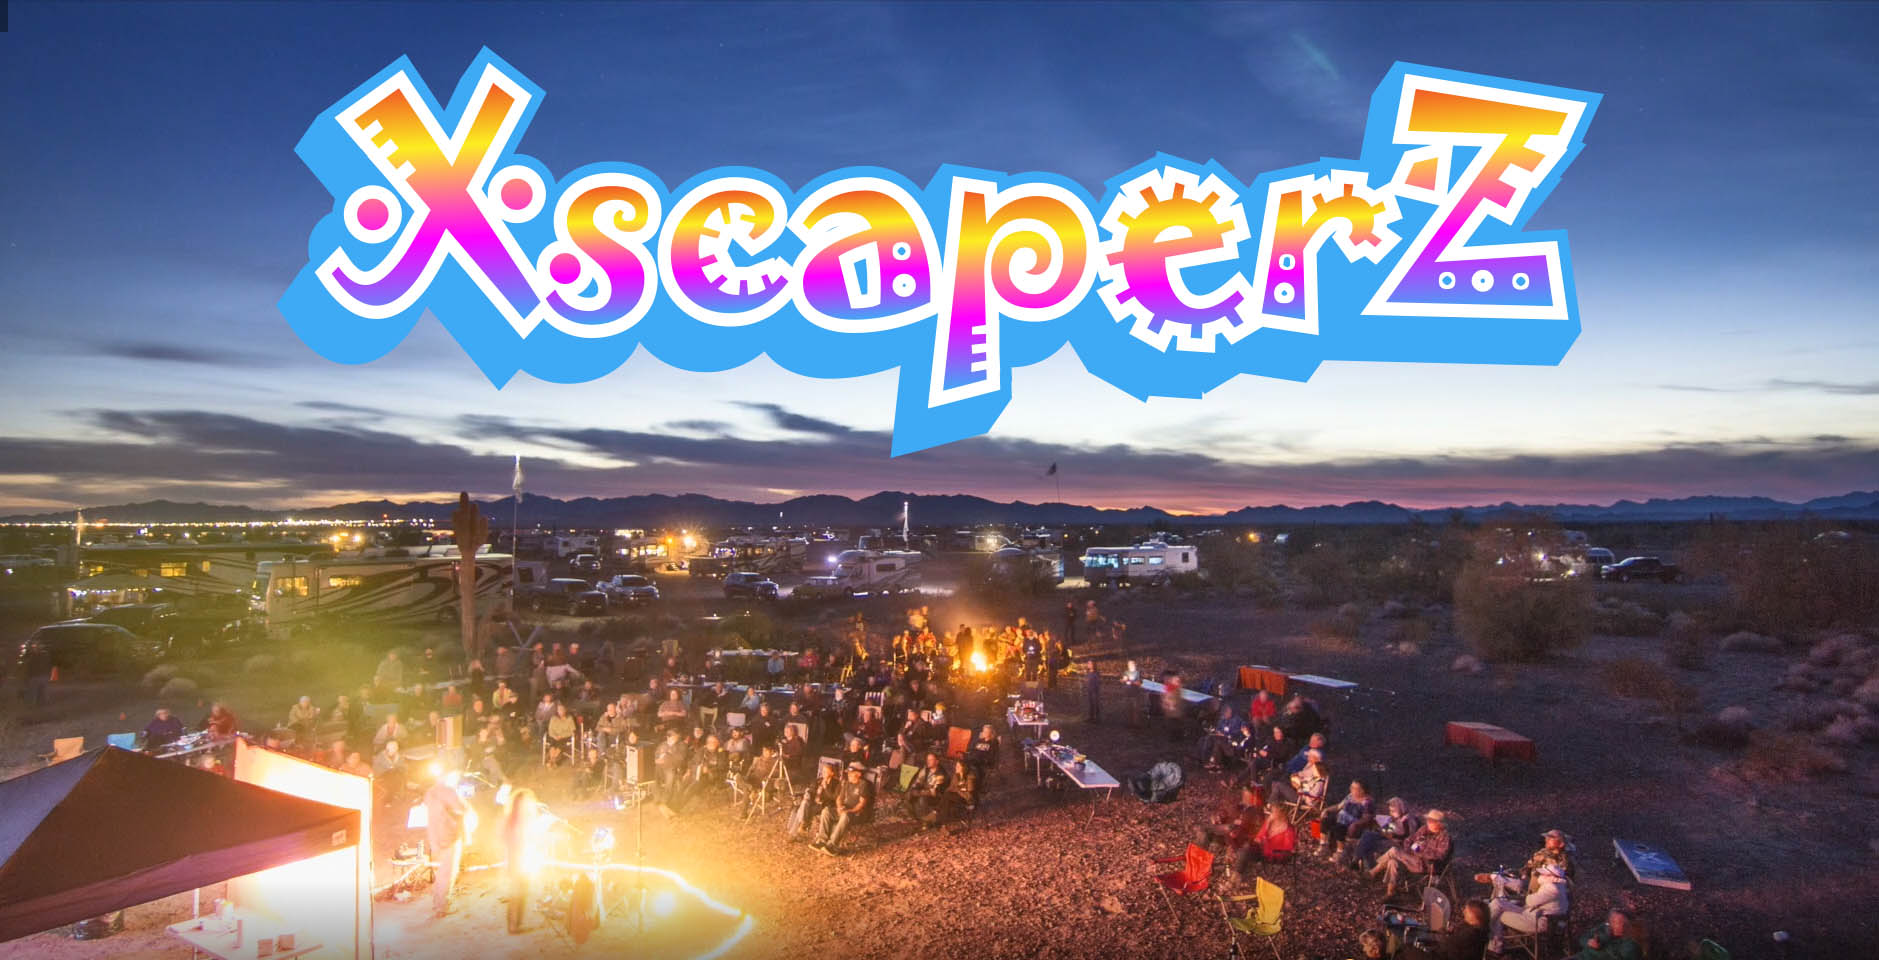 Xscapers Group Shot - April Fools